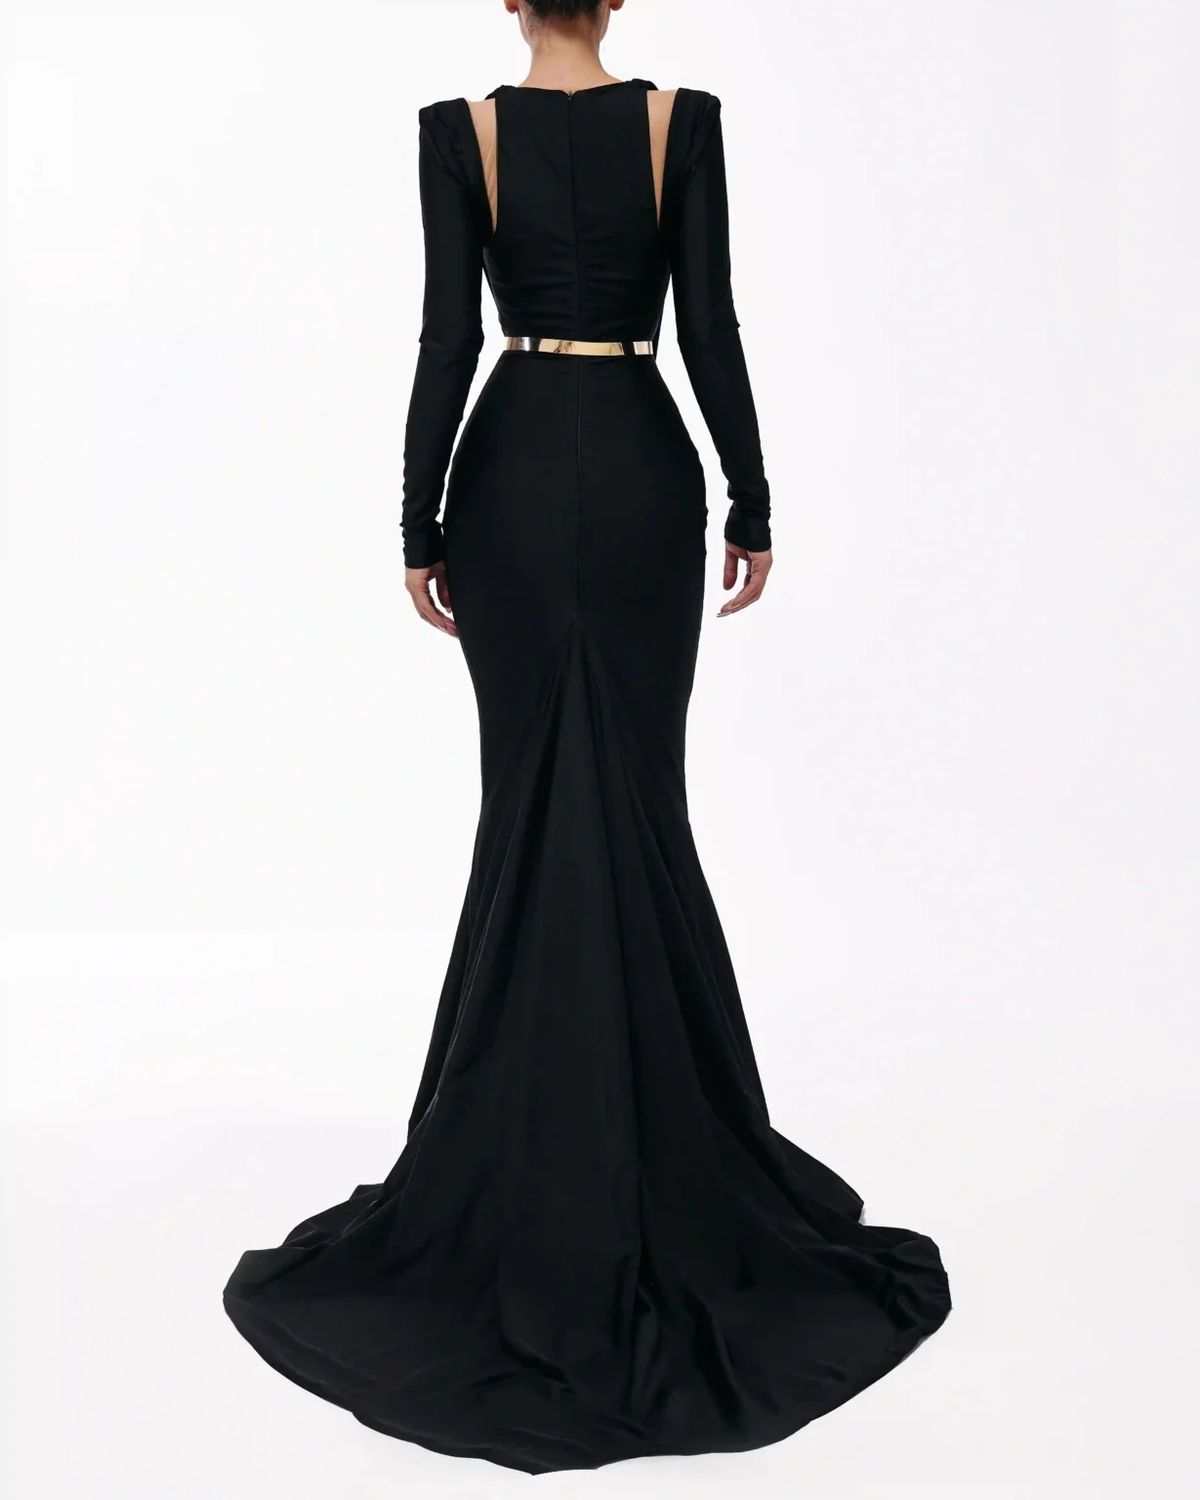 Style euphoria-24-2 Valdrin Sahiti Size XL Pageant Black Mermaid Dress on Queenly